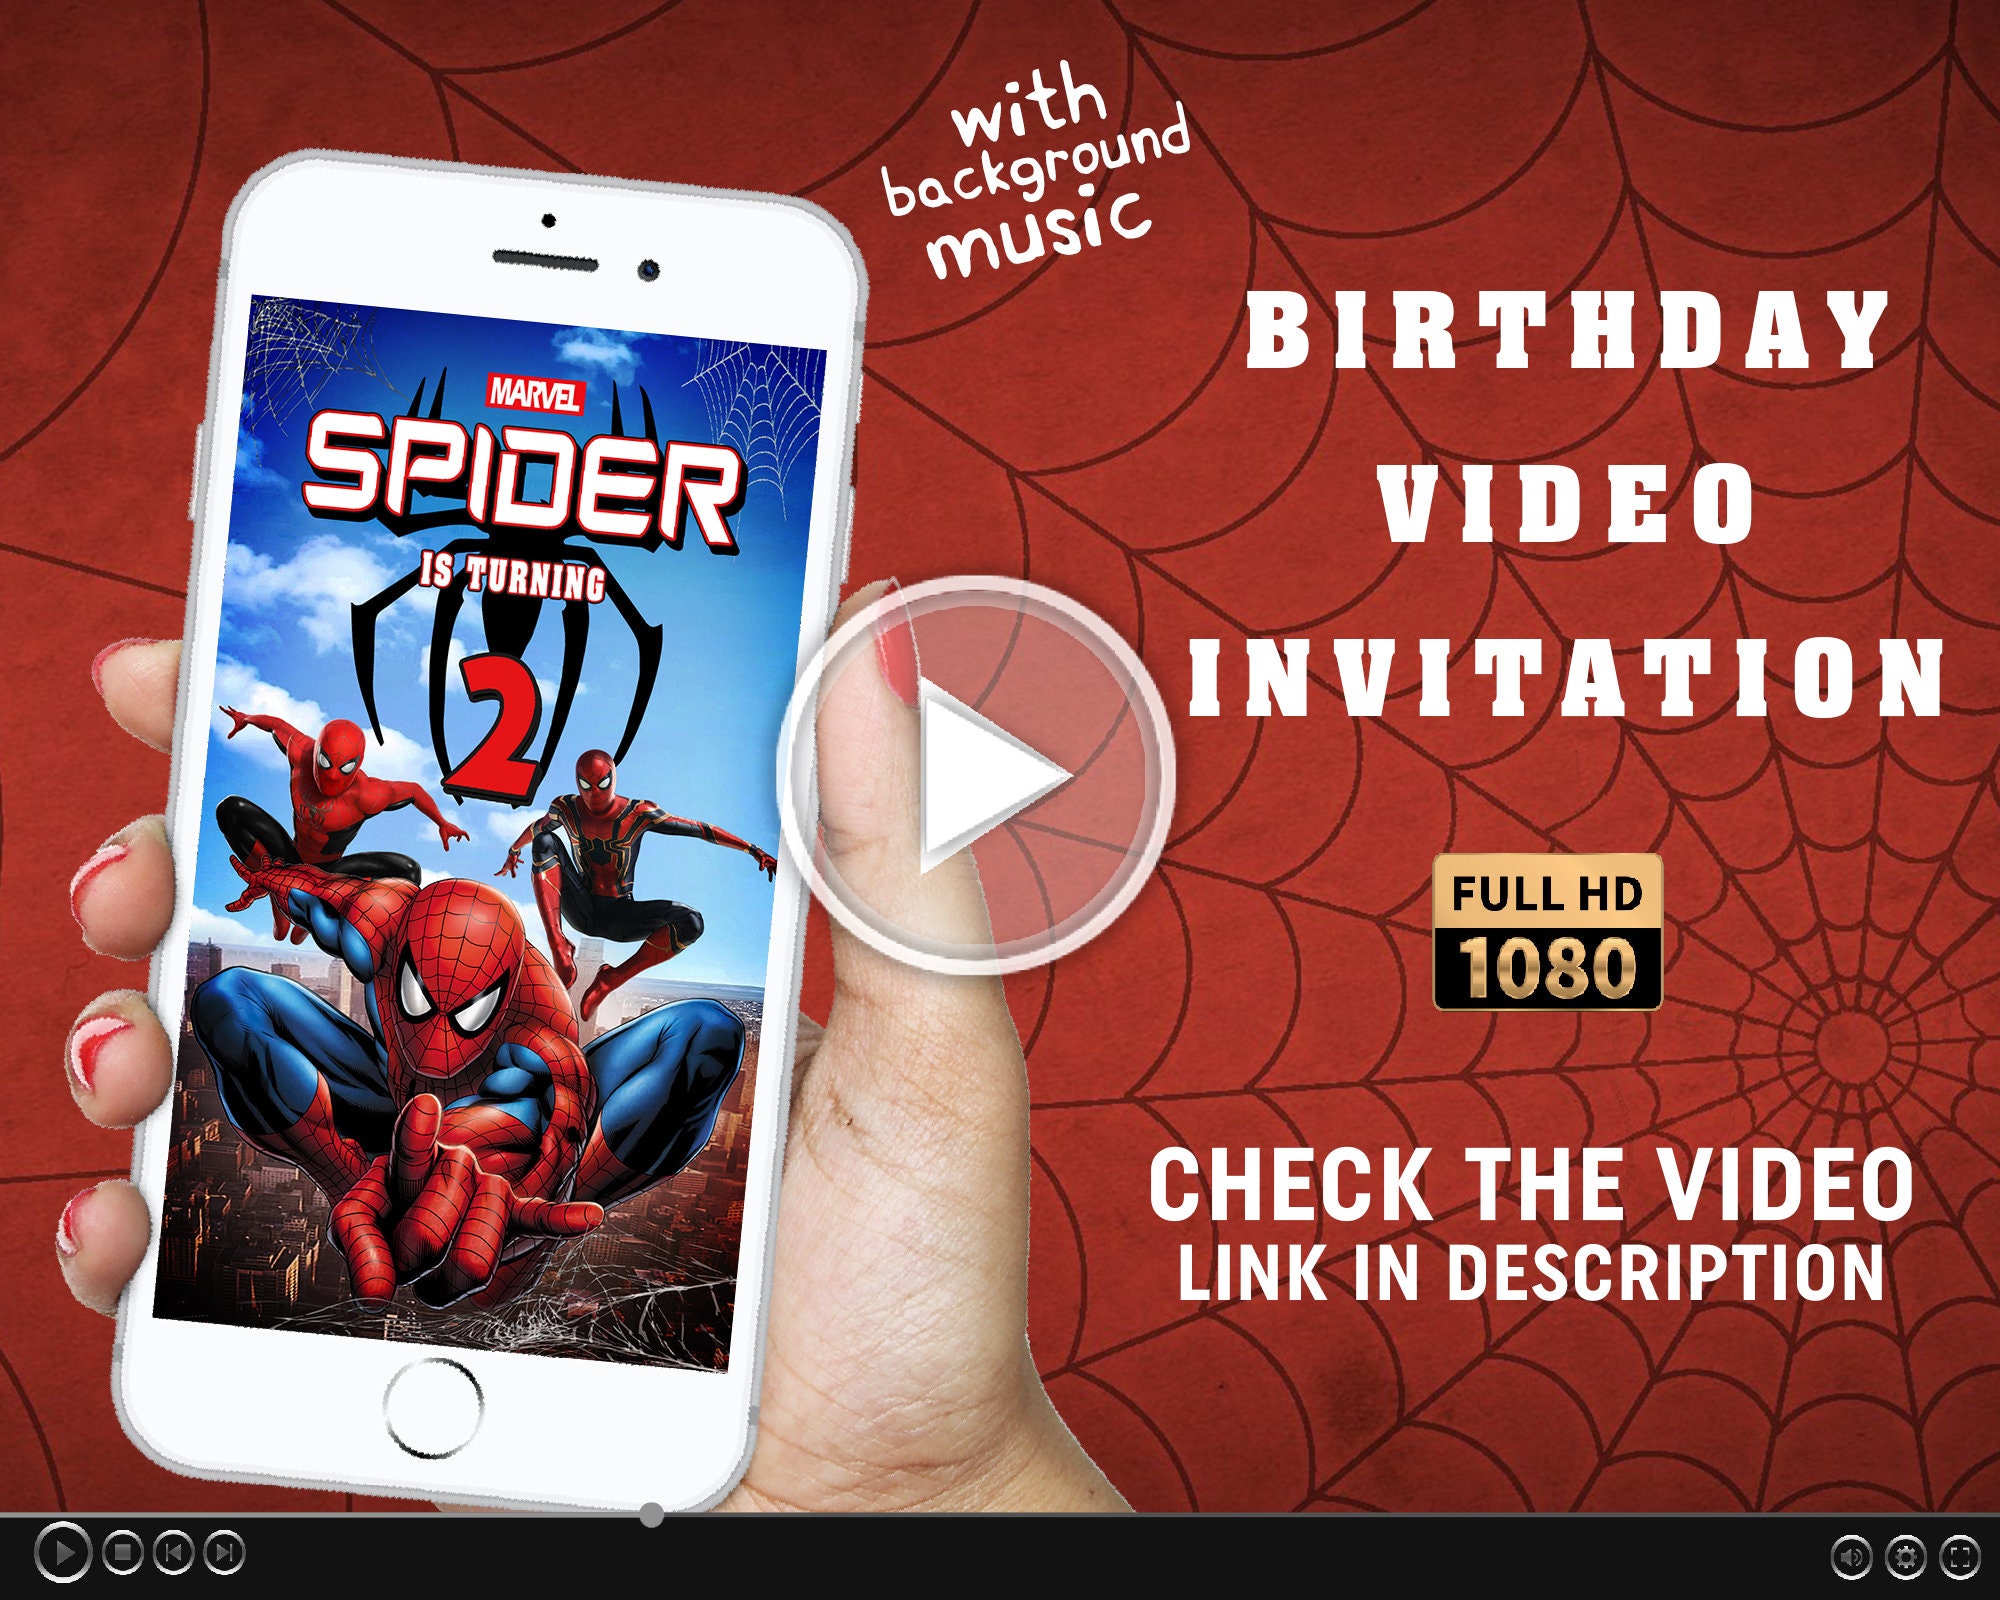 Spidey and his amazing friends birthday video invitation on Vimeo